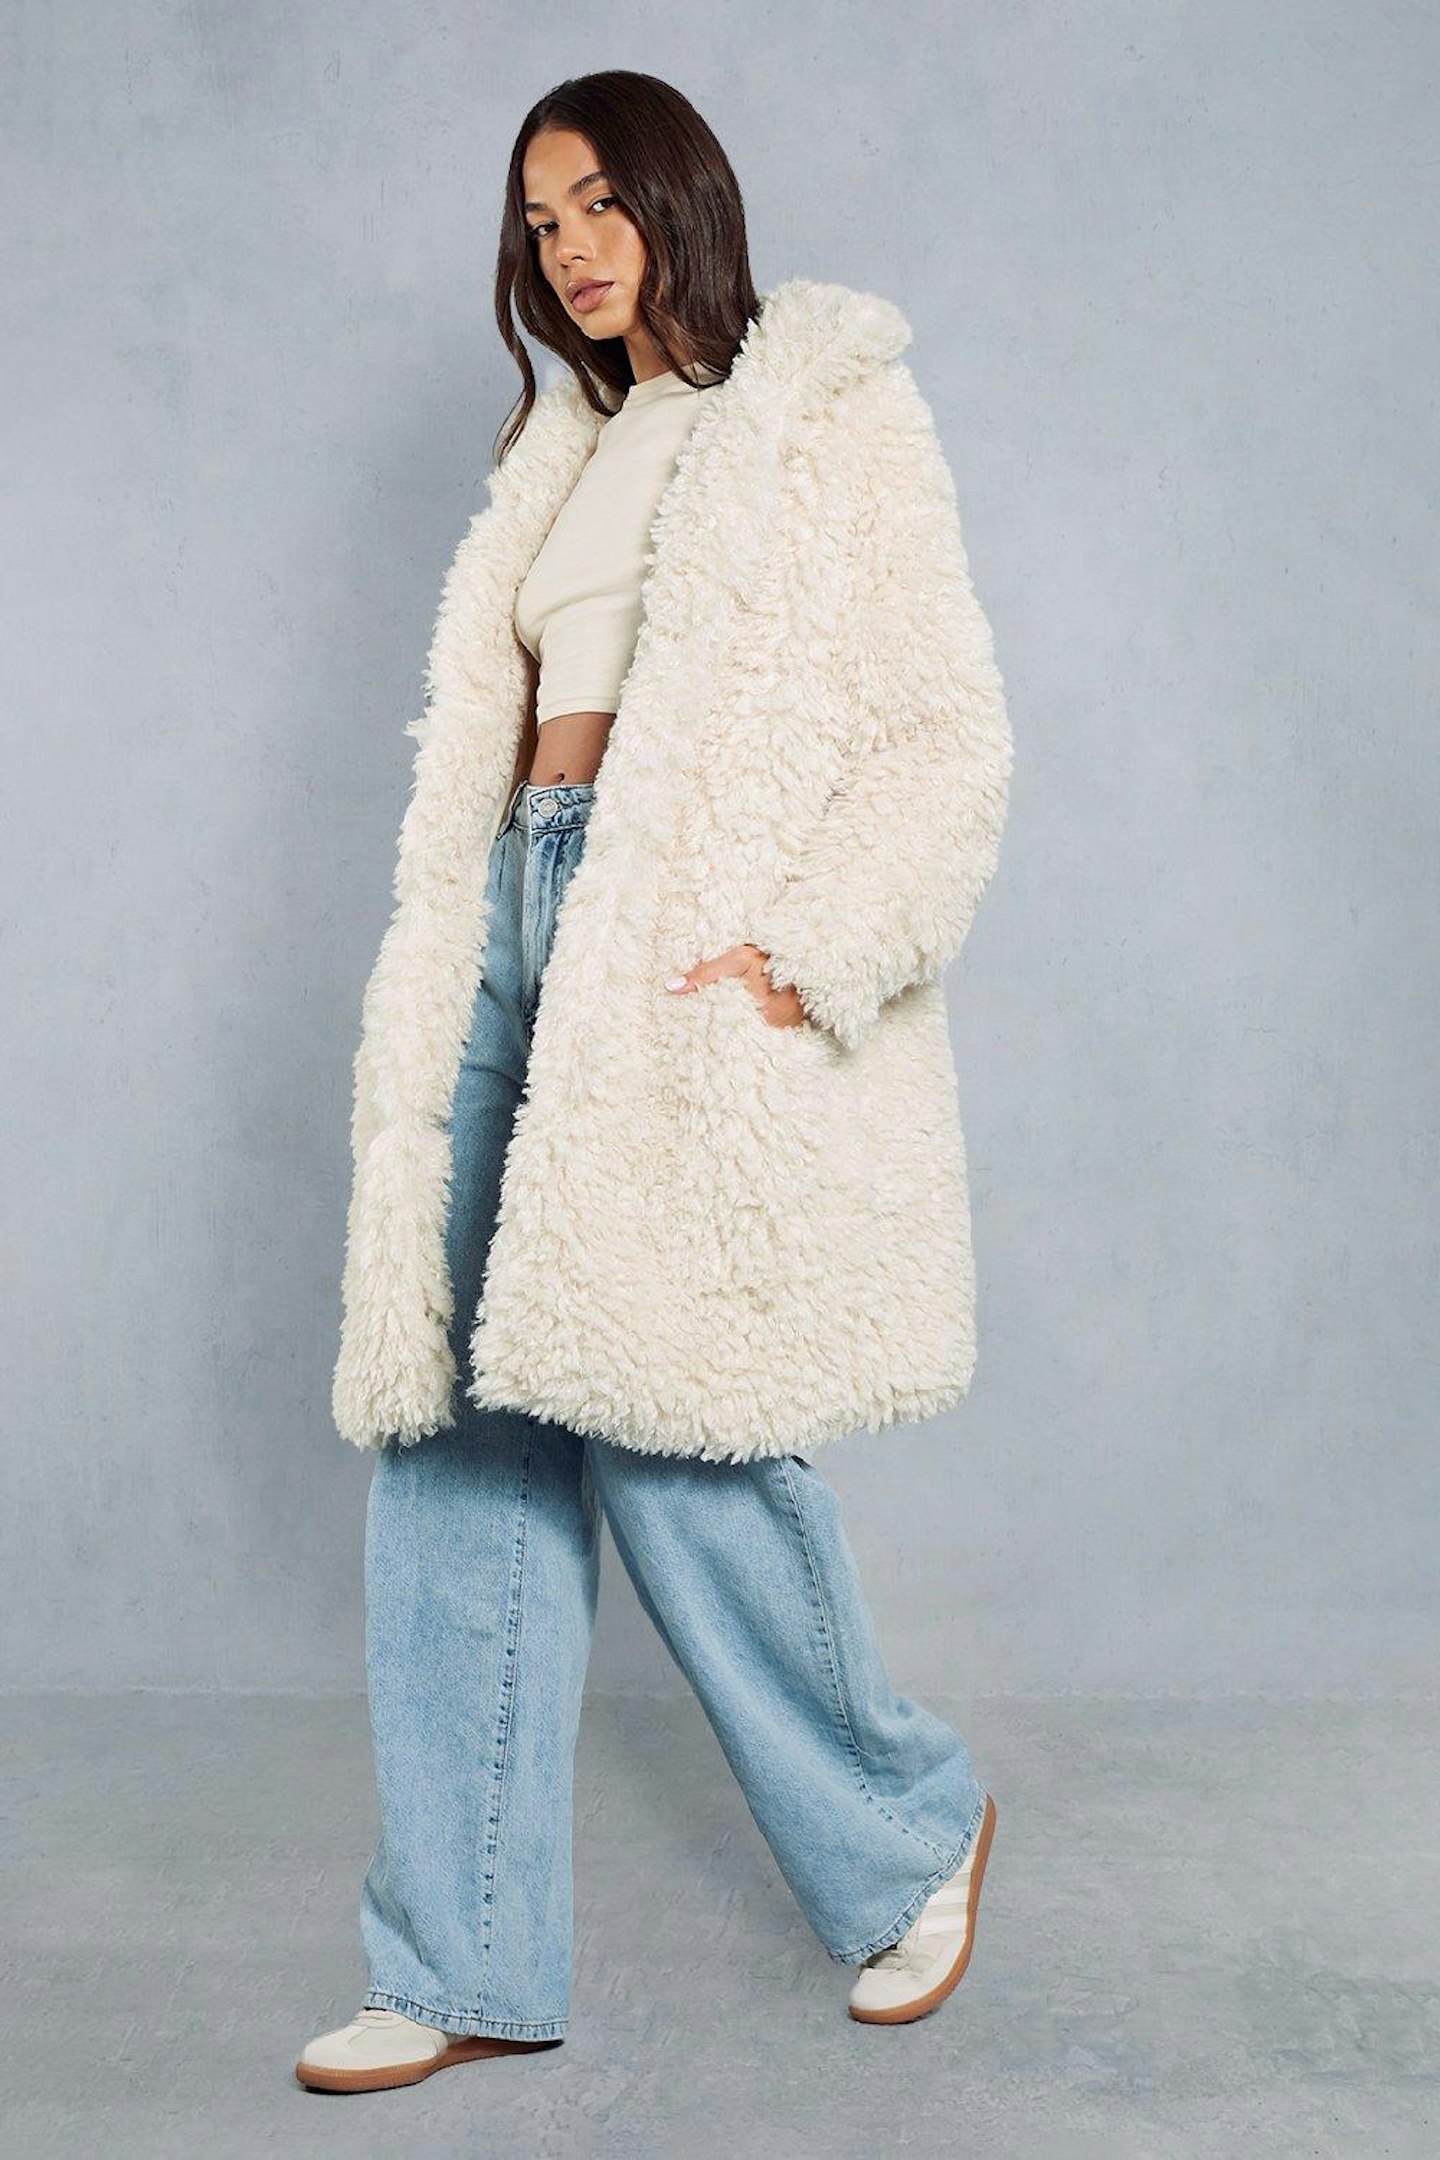 woman in shaggy fur coat